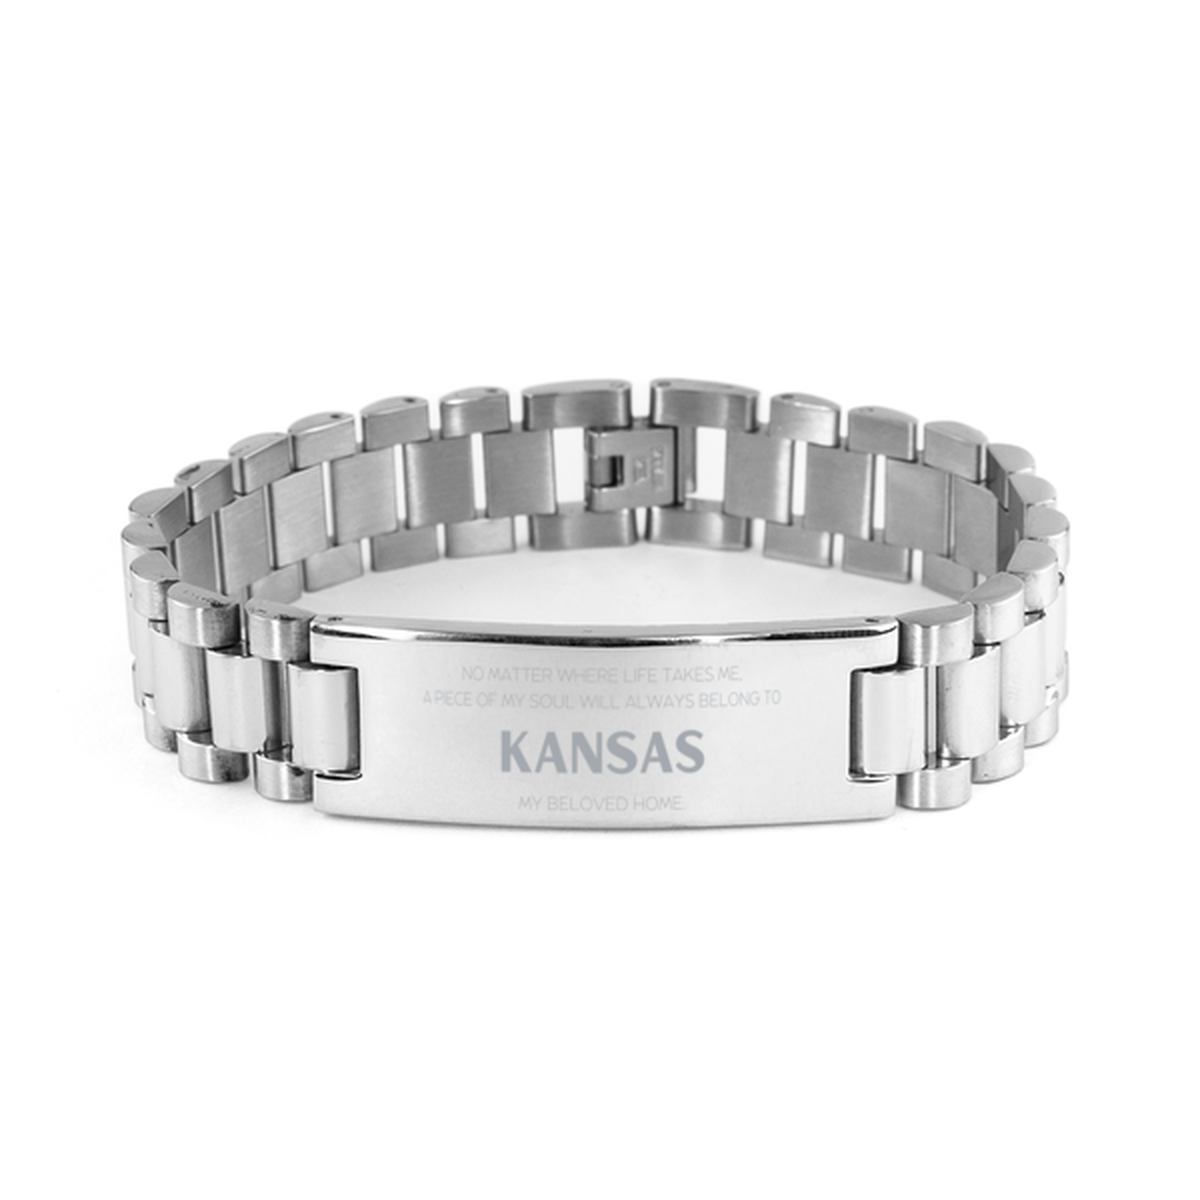 Love Kansas State Gifts, My soul will always belong to Kansas, Proud Ladder Stainless Steel Bracelet, Birthday Unique Gifts For Kansas Men, Women, Friends